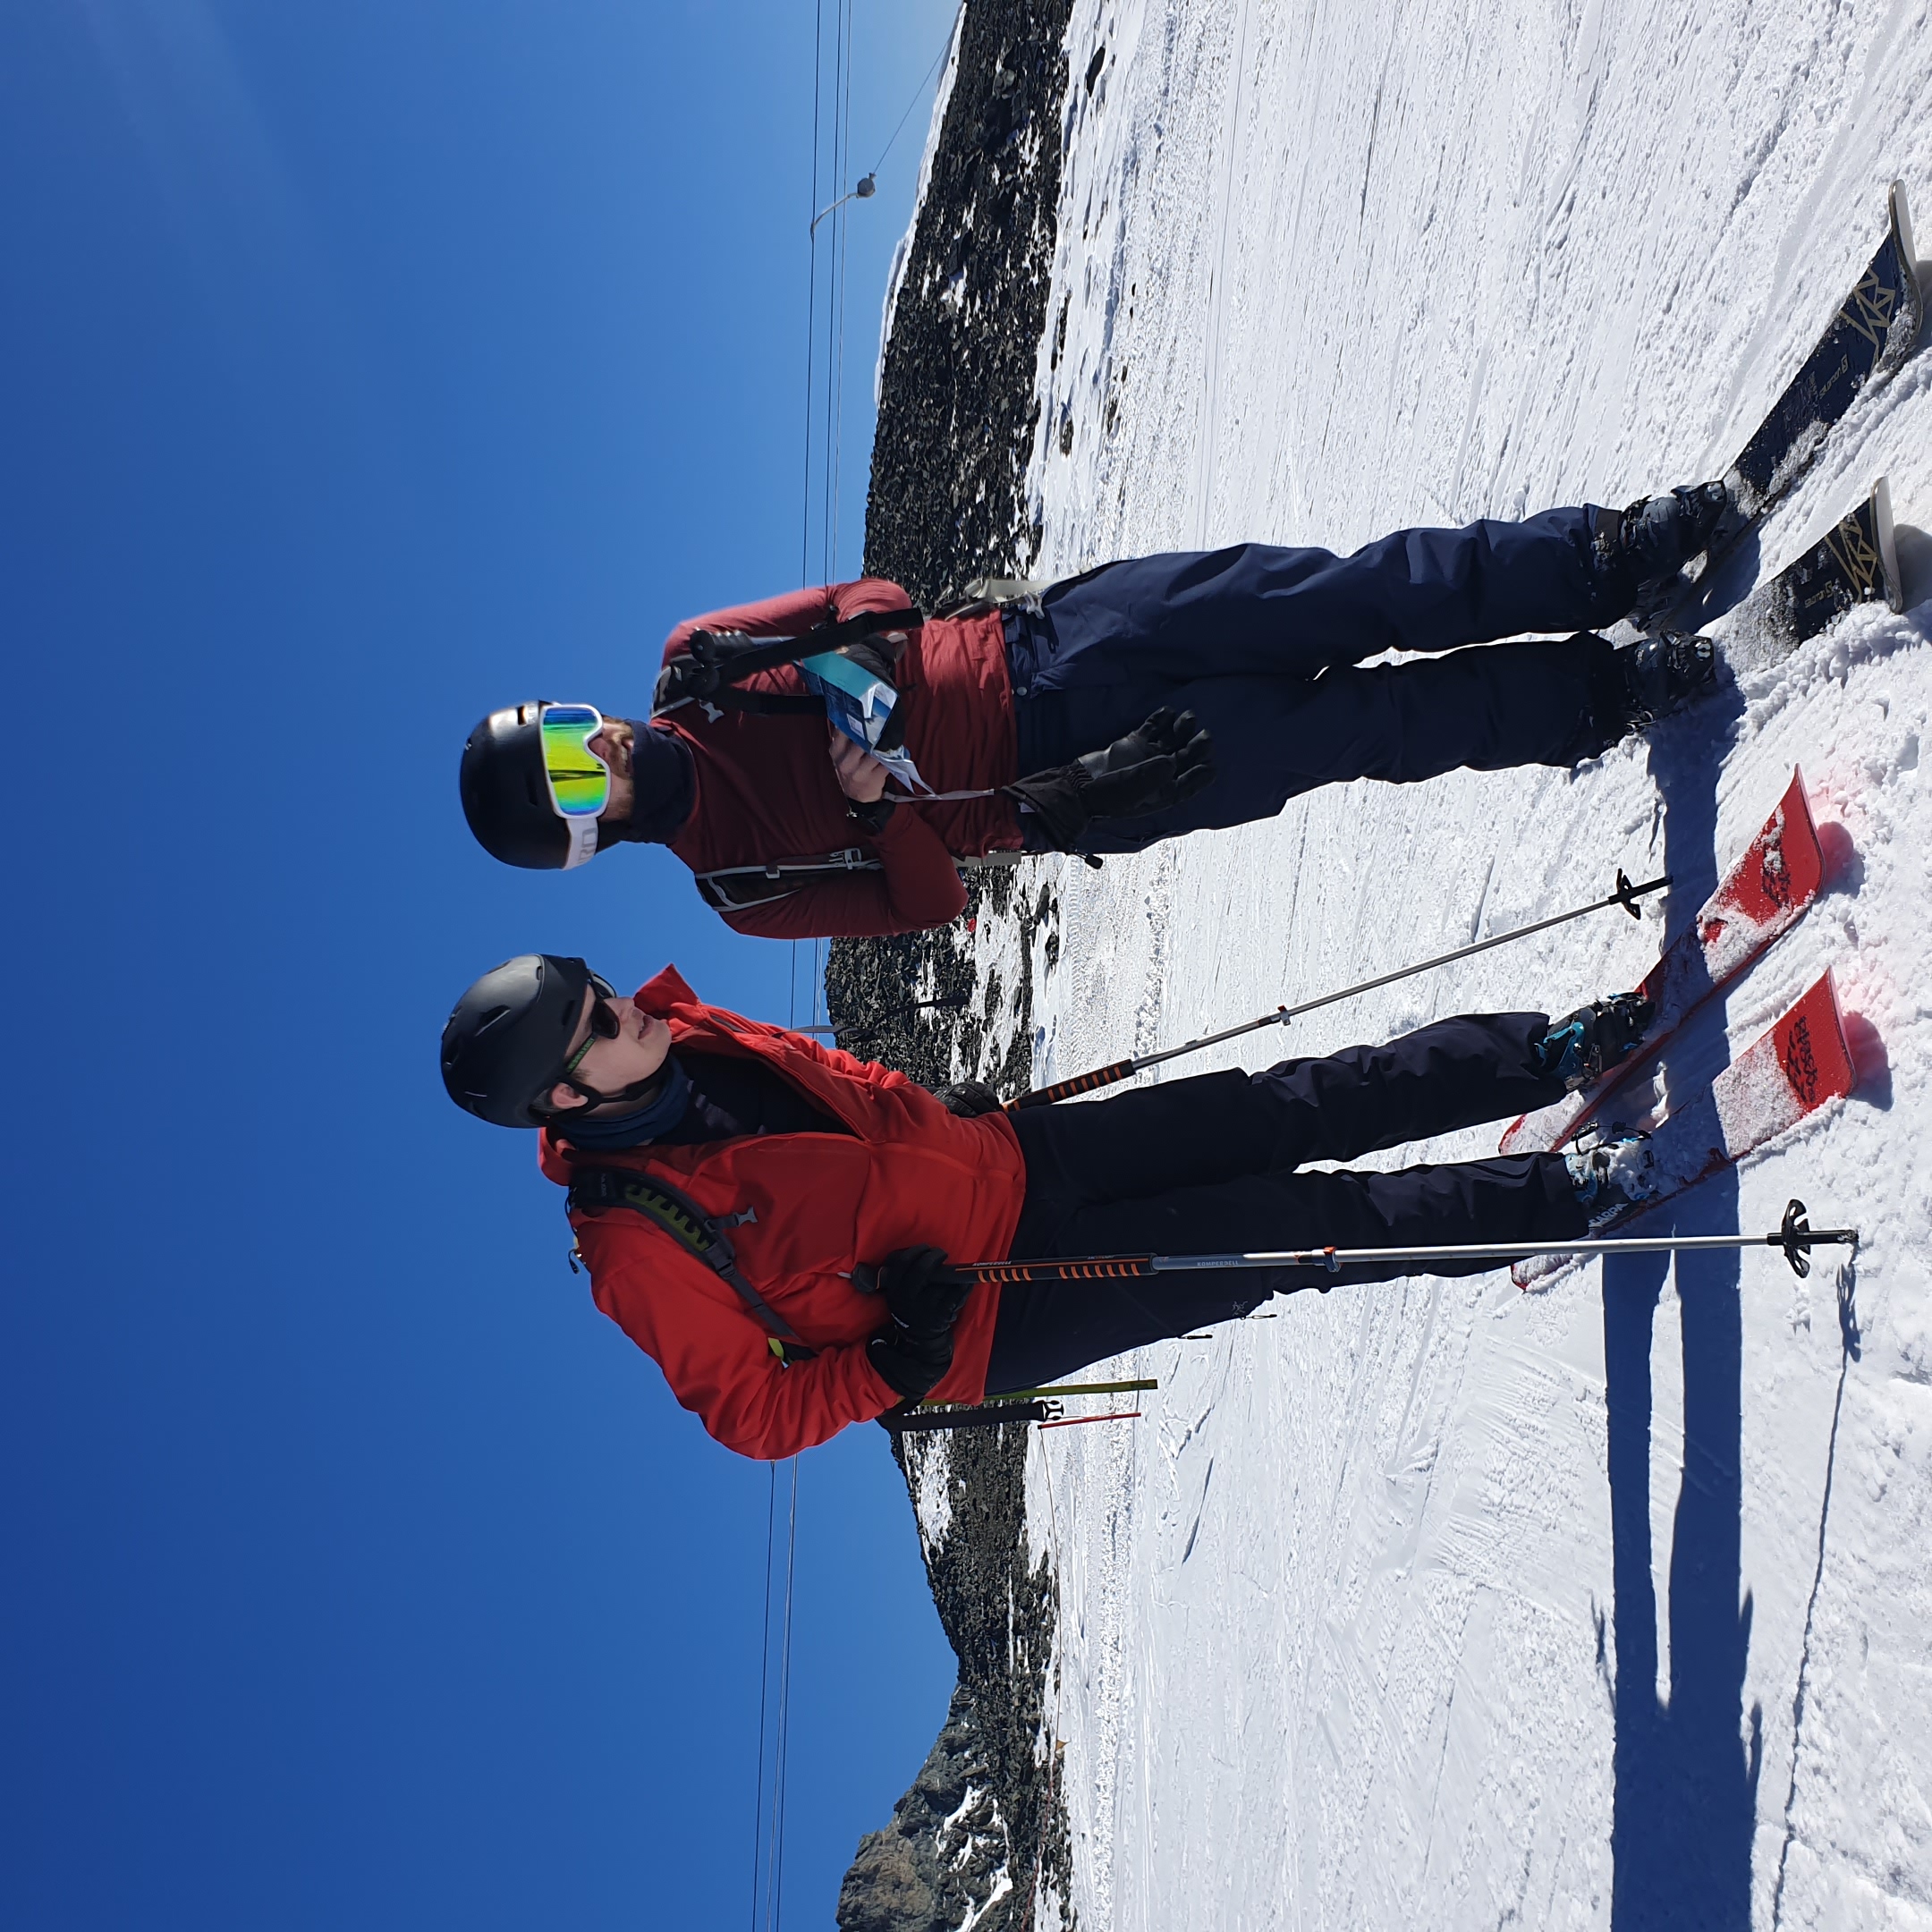 a photo of two of my work friends in ski gear, wearingskis